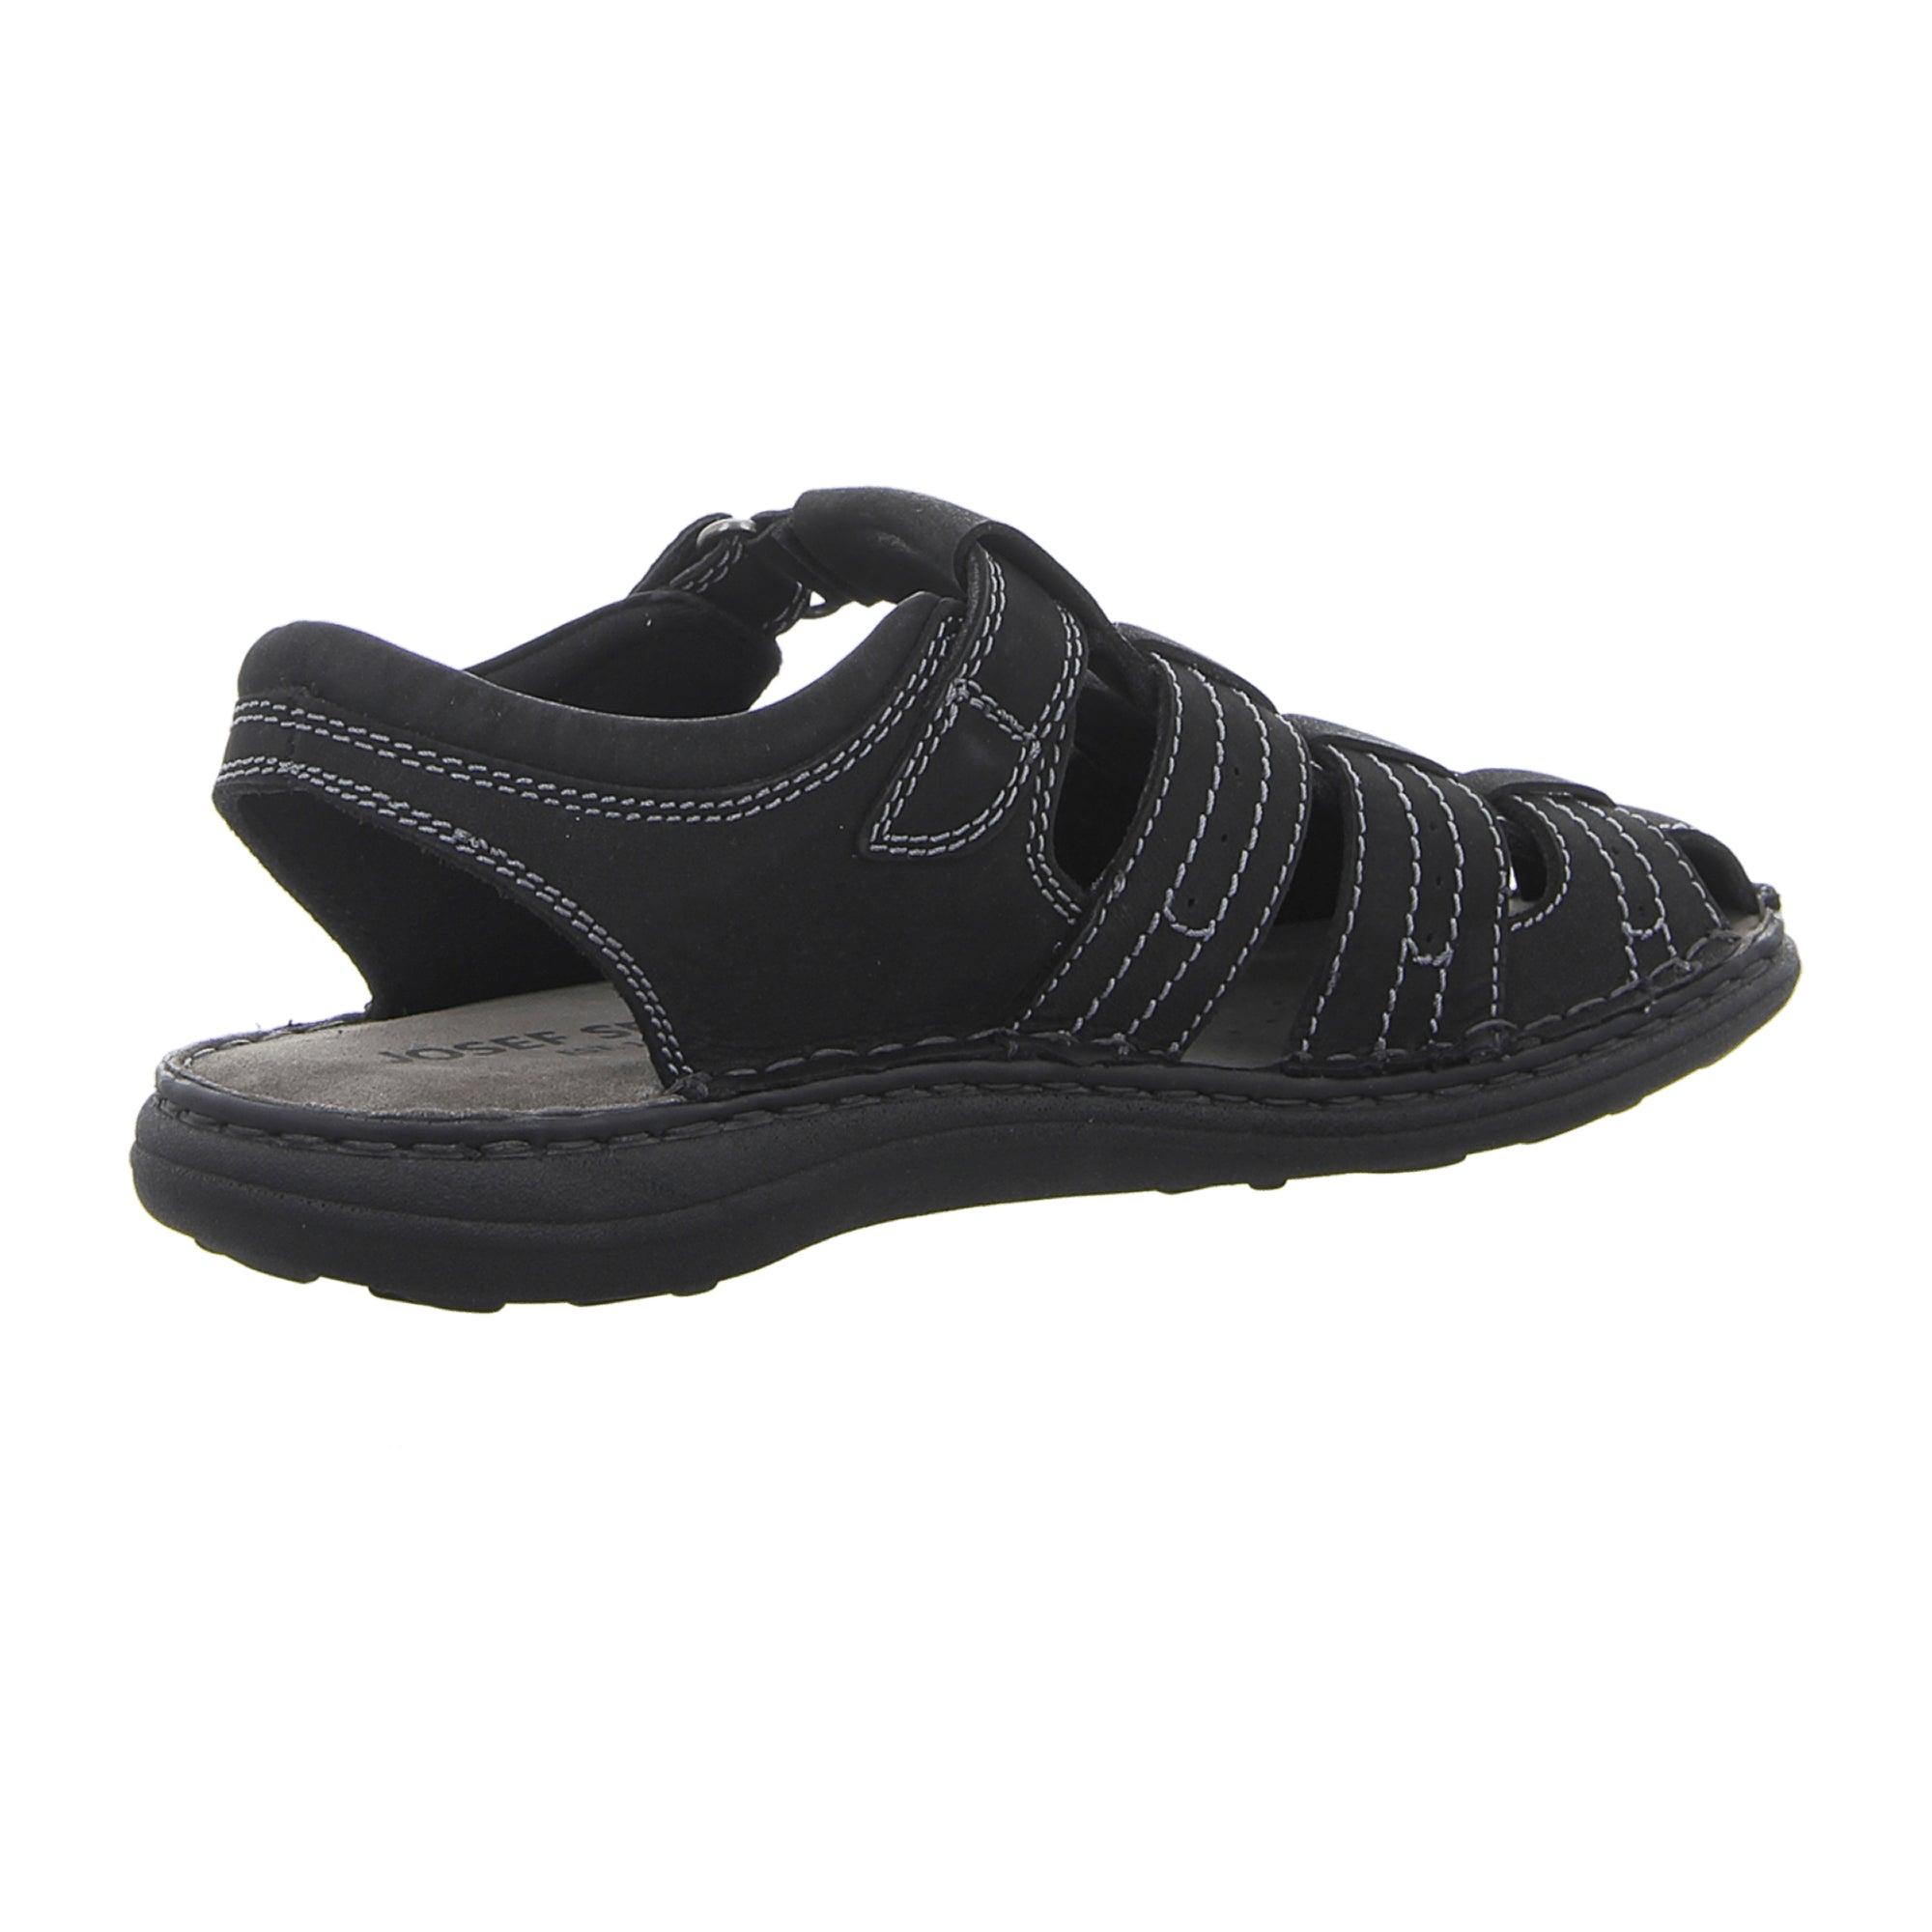 Josef Seibel Comfortable Sandals for Men in Black